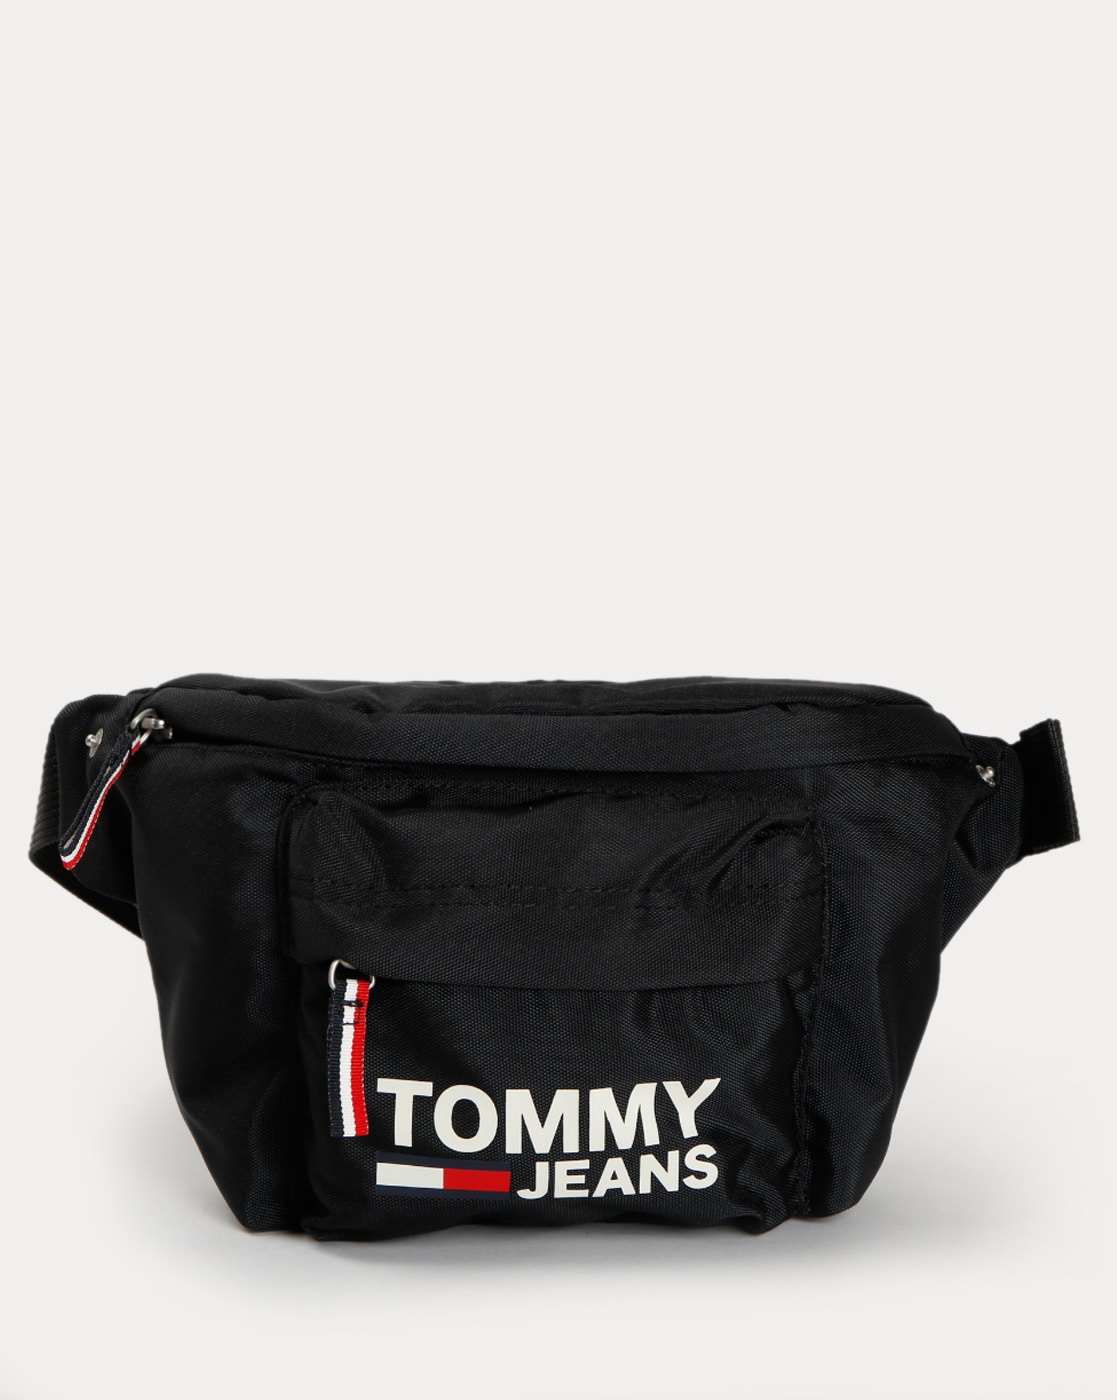 tommy hilfiger waist bag price